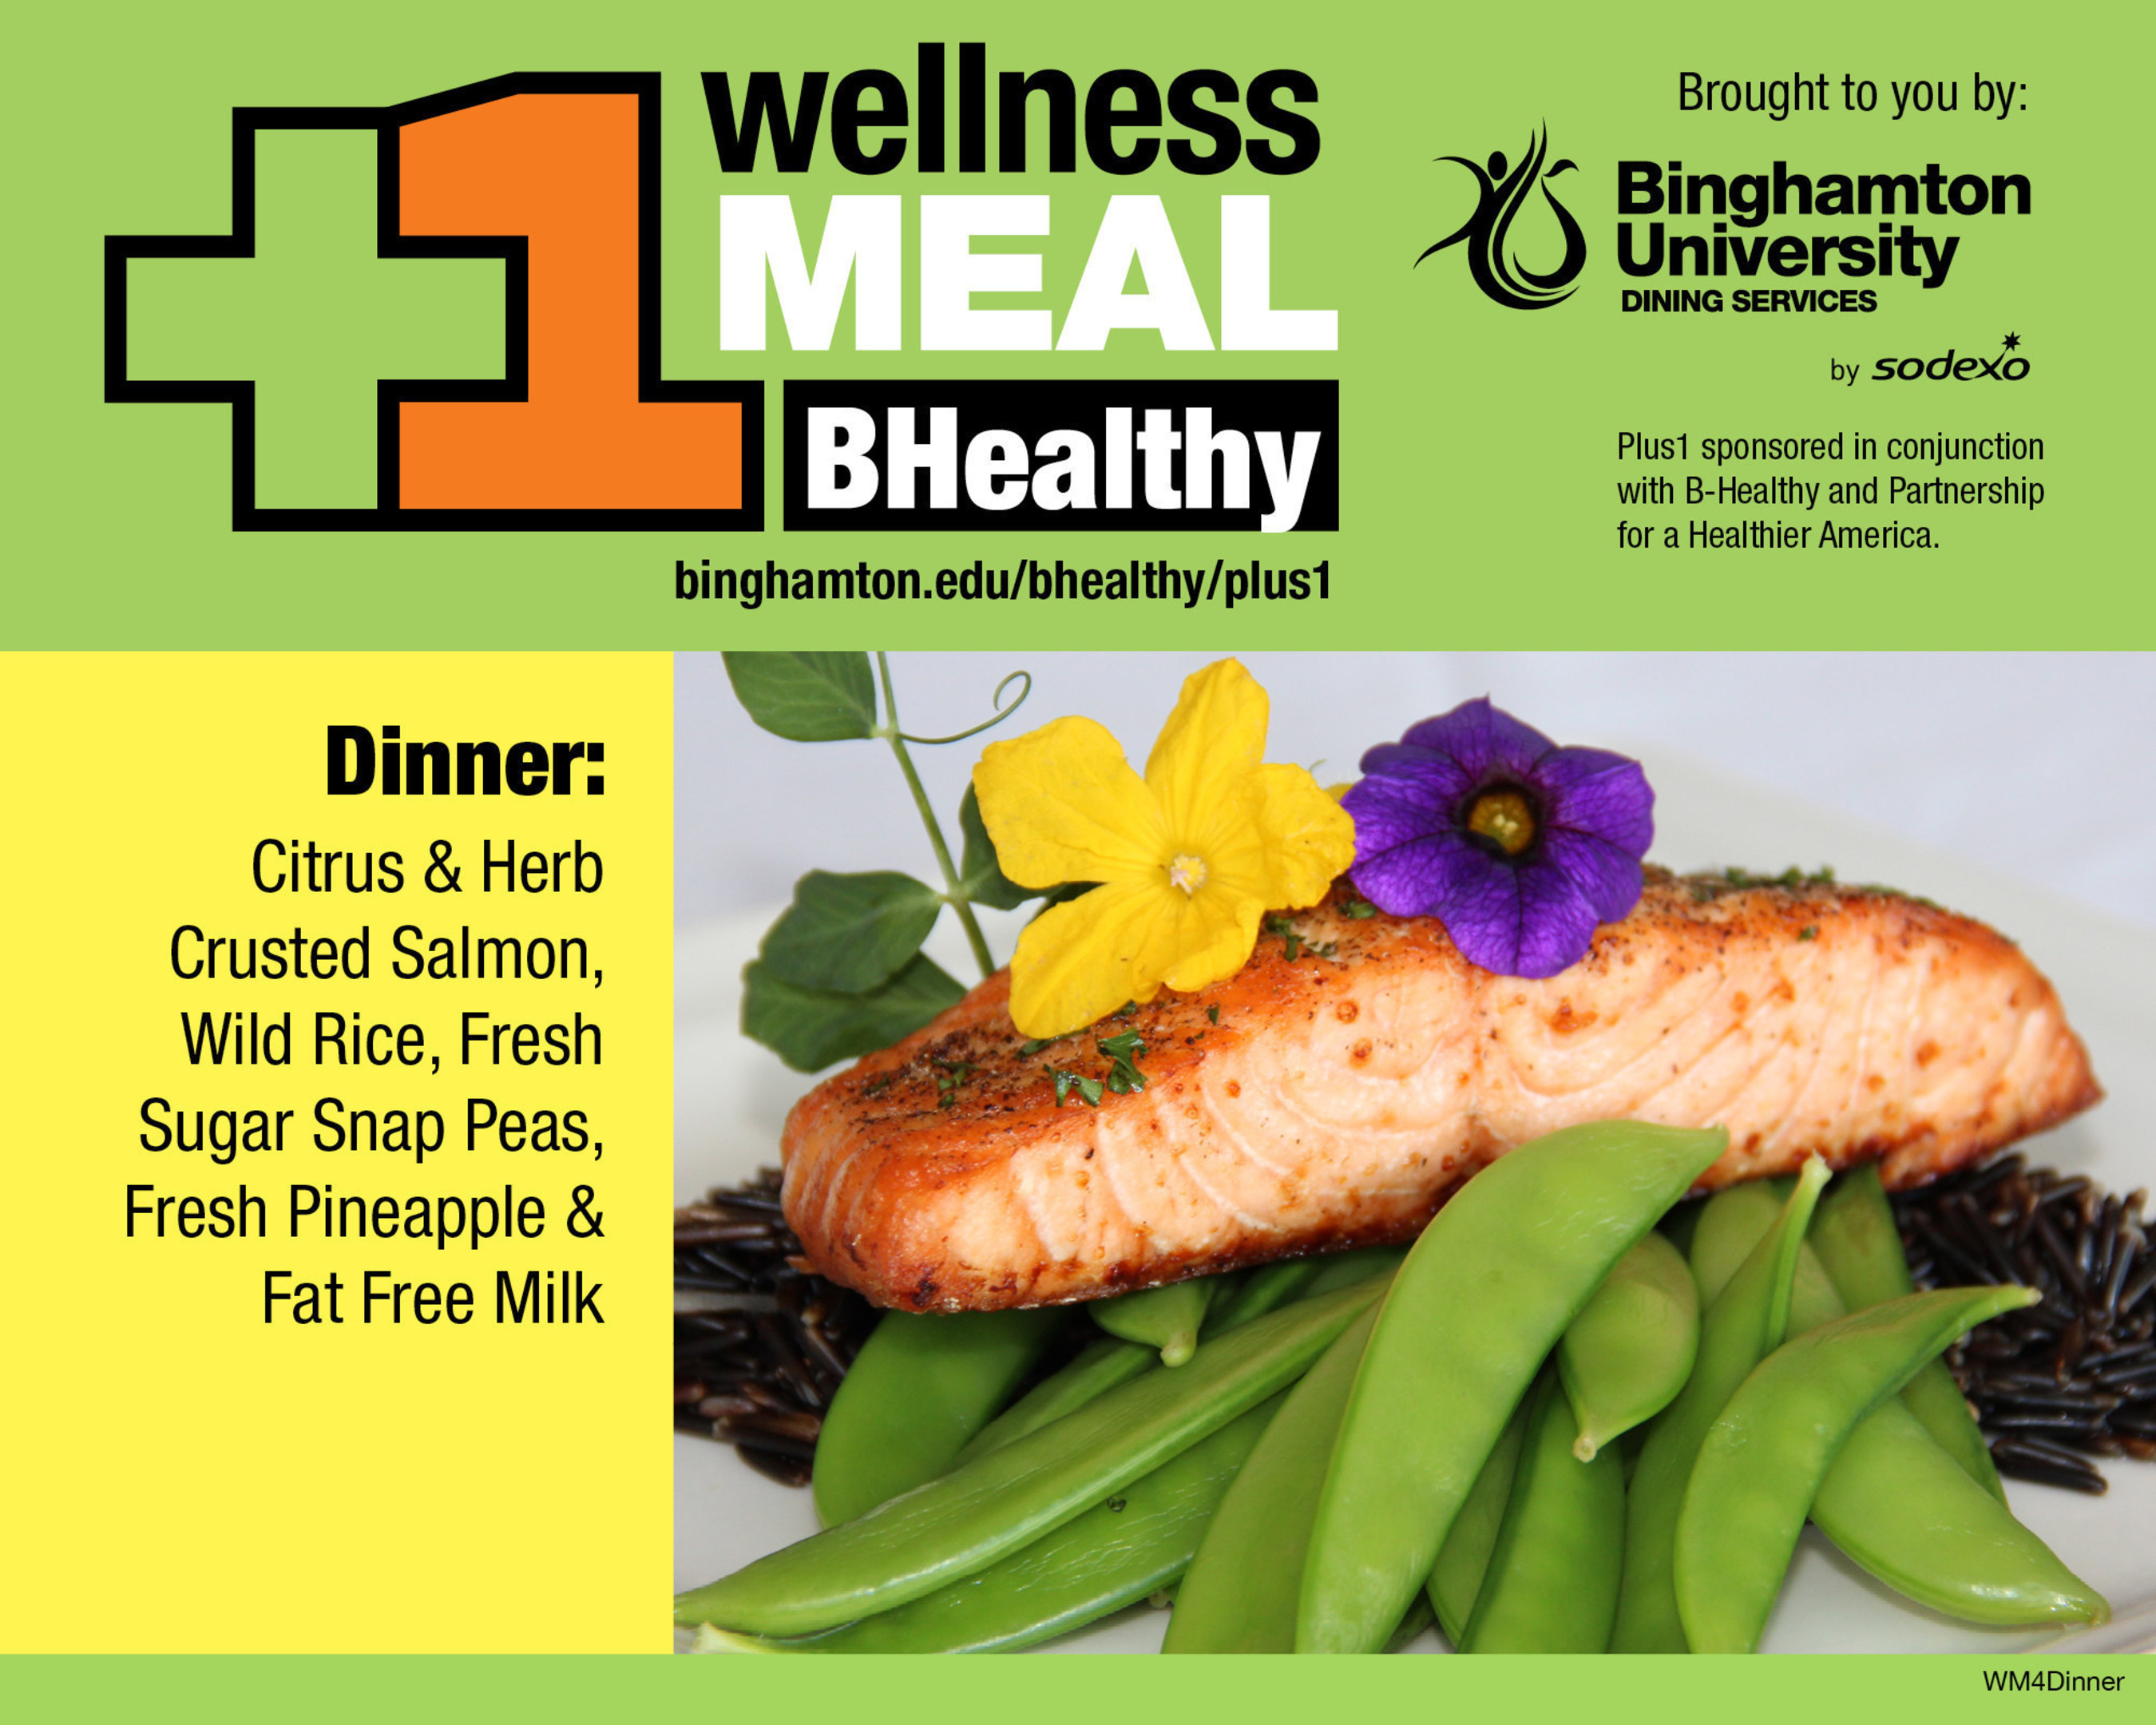 B-Healthy Wellness Meal at Binghamton University - Citrus and Herb Crusted Salmon, Wild Rice, Fresh Sugar Snap Peas, Fresh Pineapple and Fat Free Milk